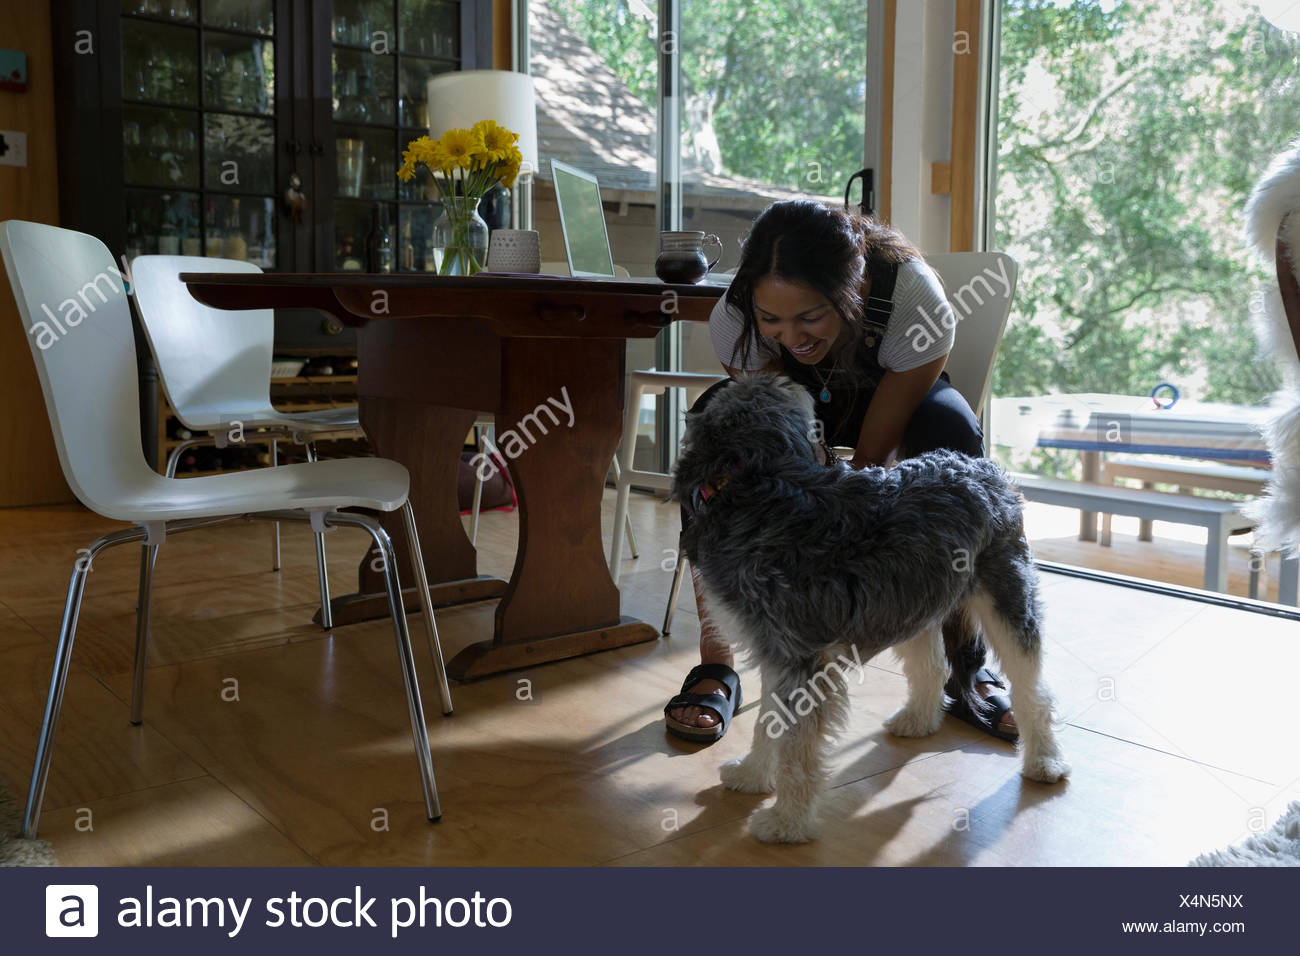 Dog Licking Woman Stock Photo 278290038 Alamy